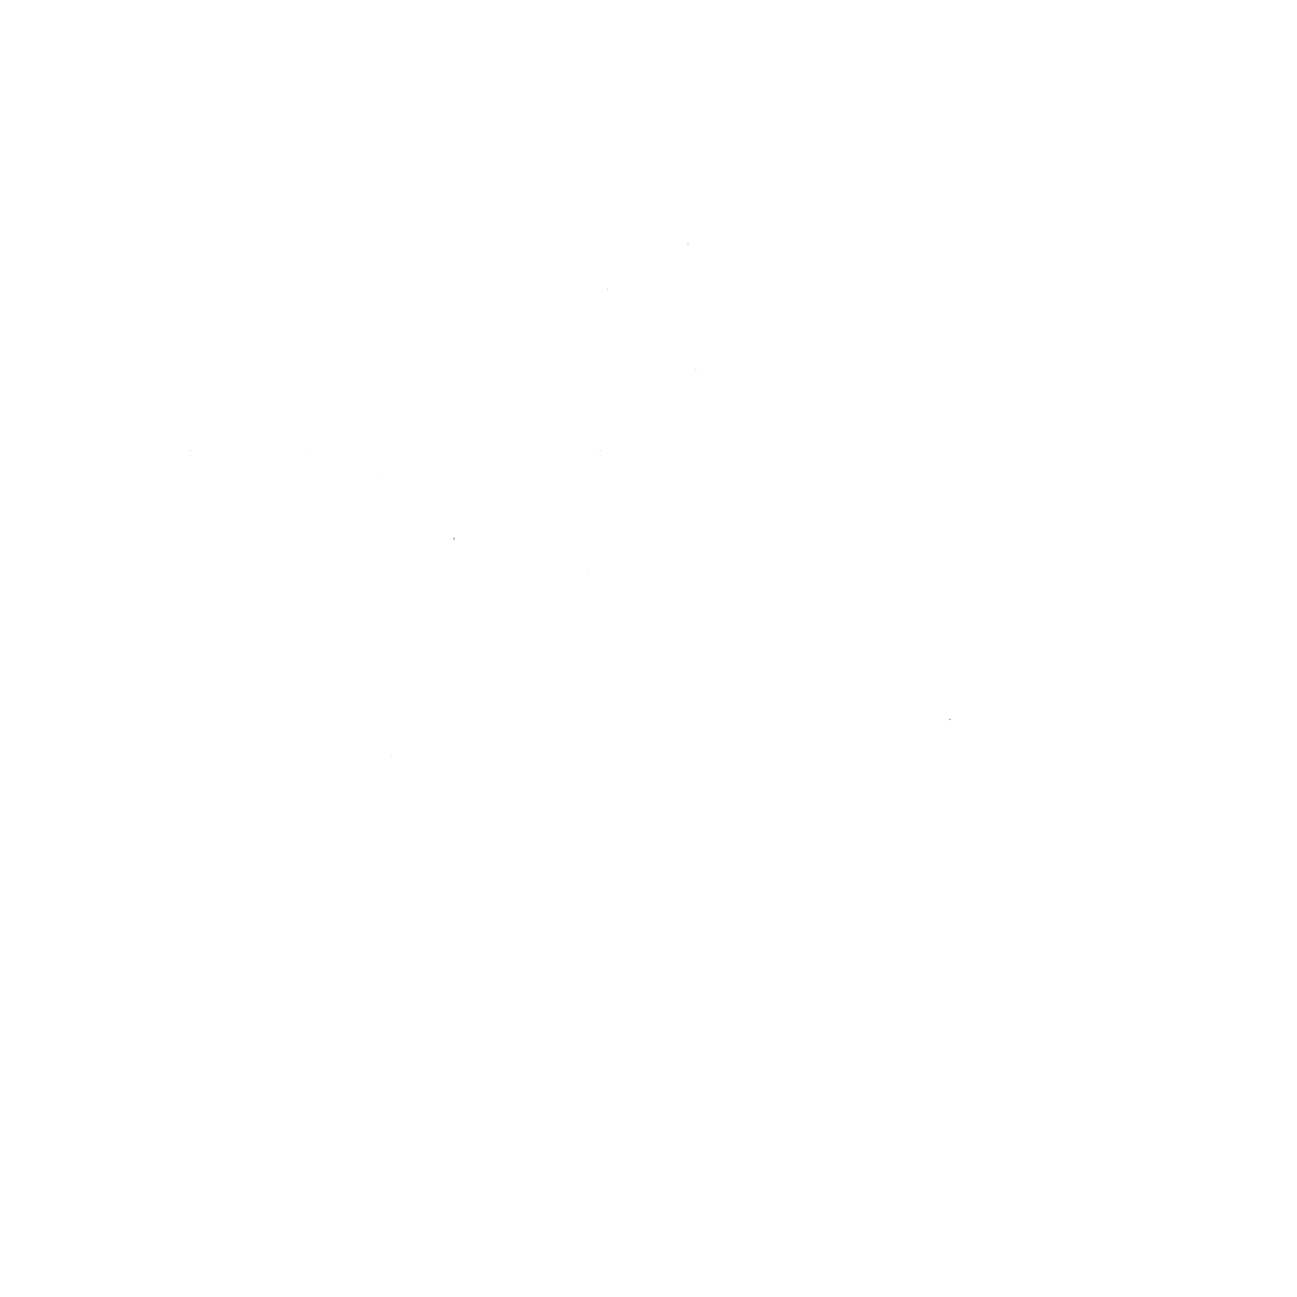 Watch the Delta Grow